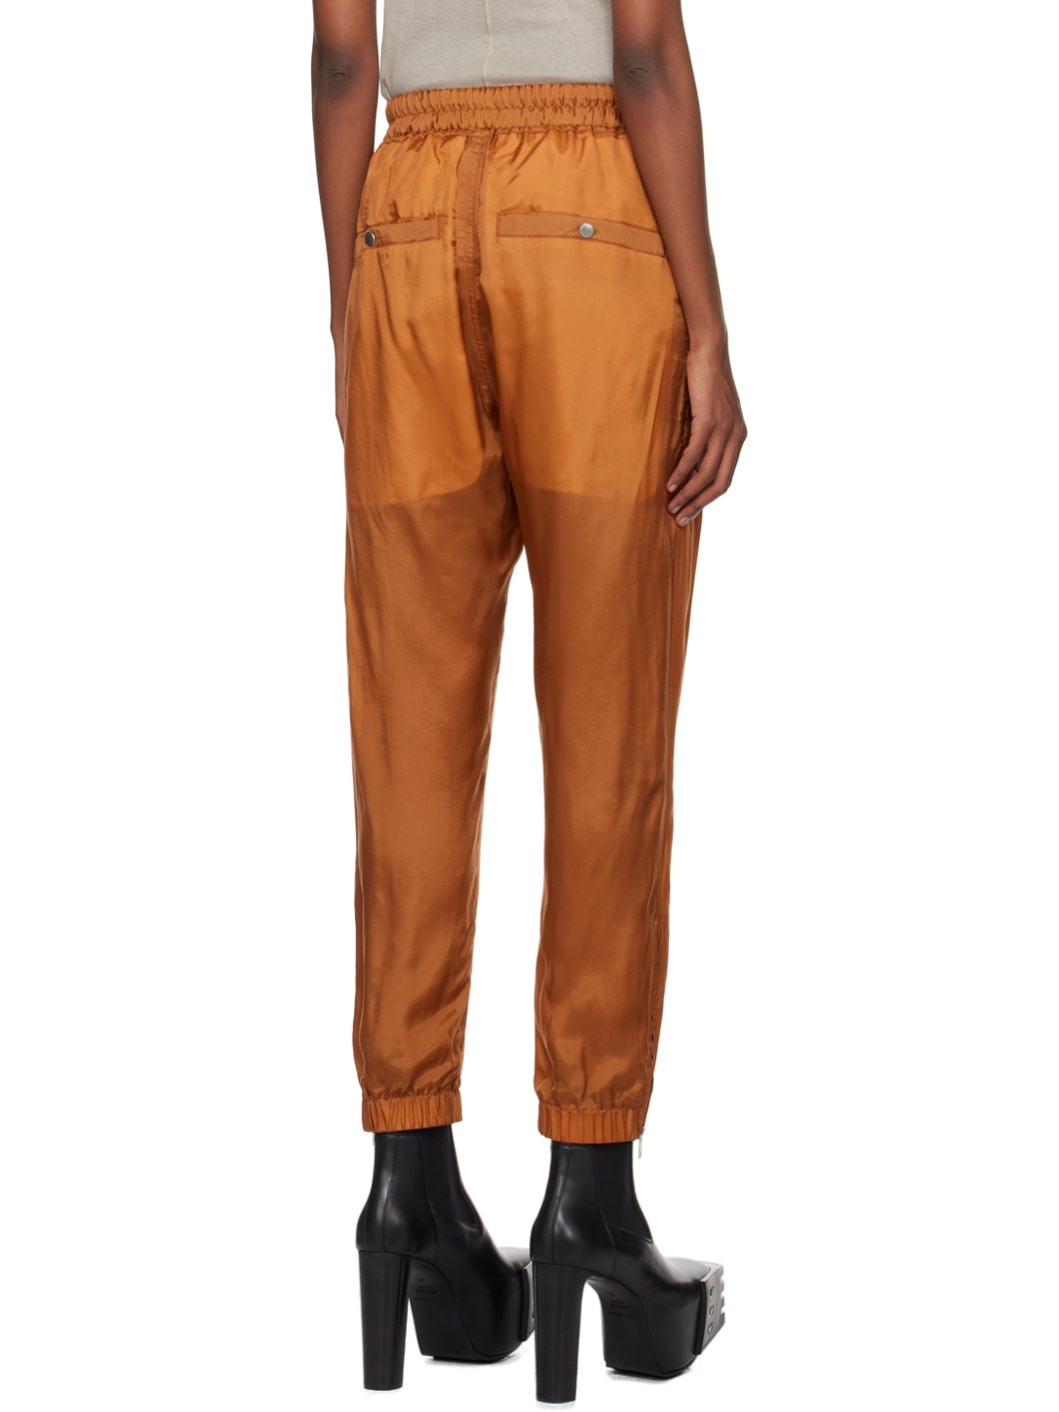 Orange Track Lounge Pants - 3